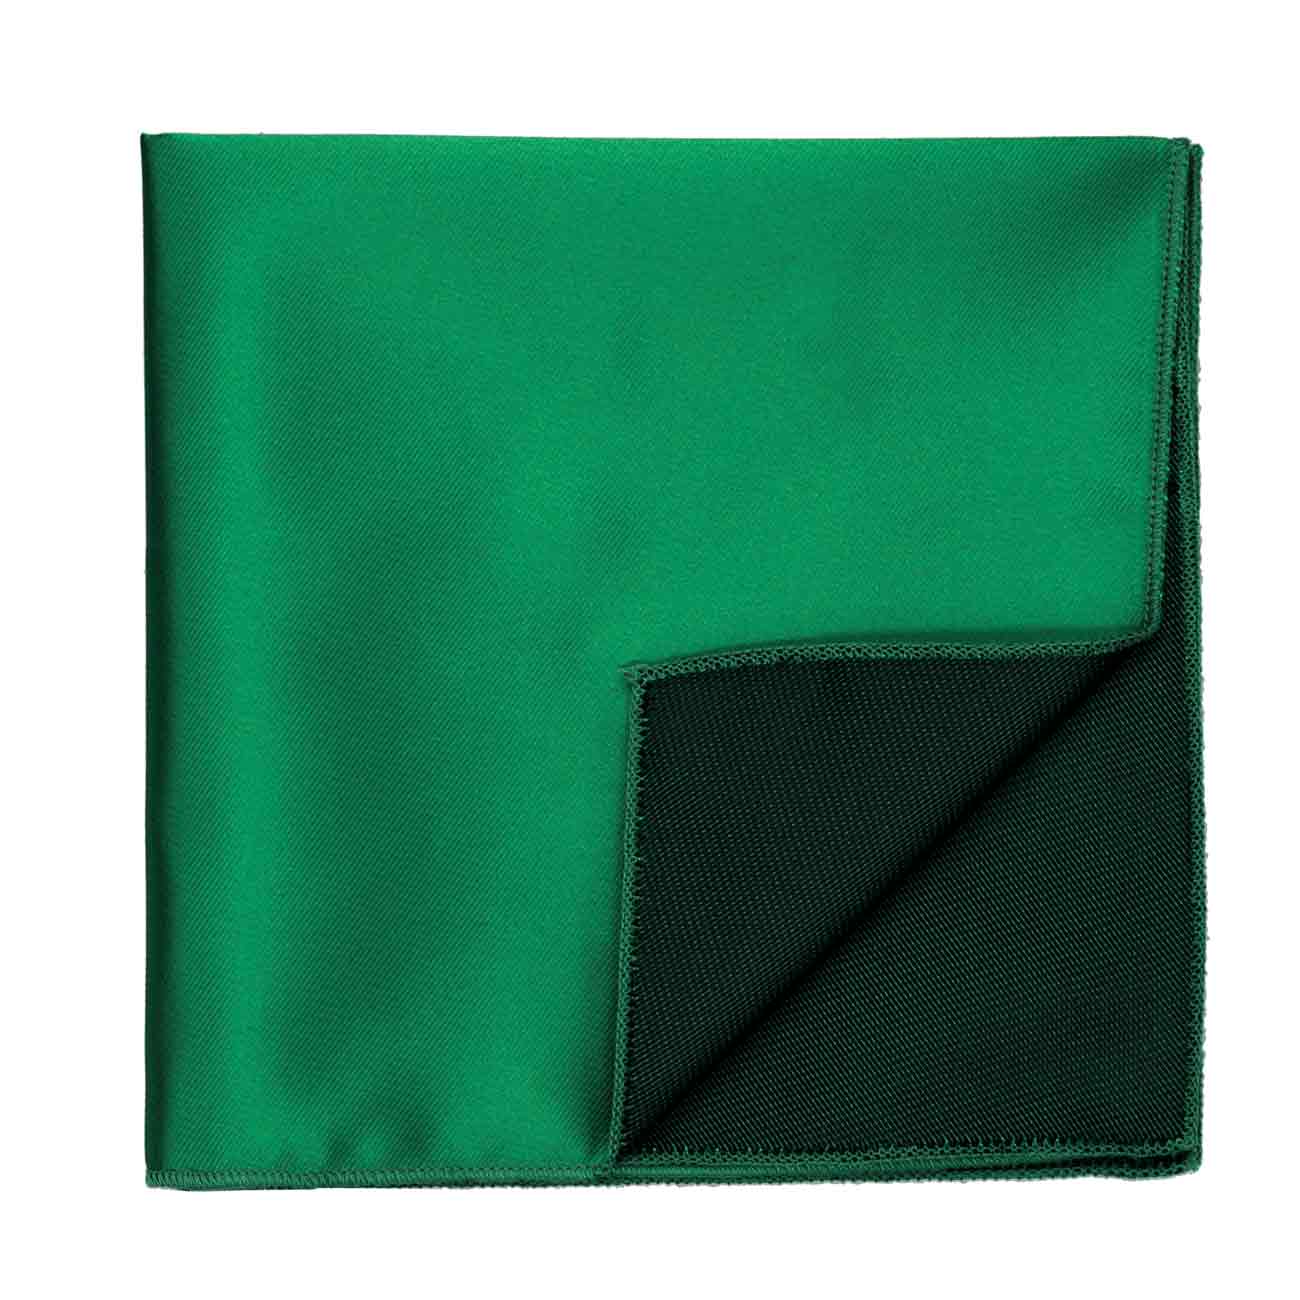 Kelly Green Solid Color Pocket Square | Shop at TieMart – TieMart, Inc.